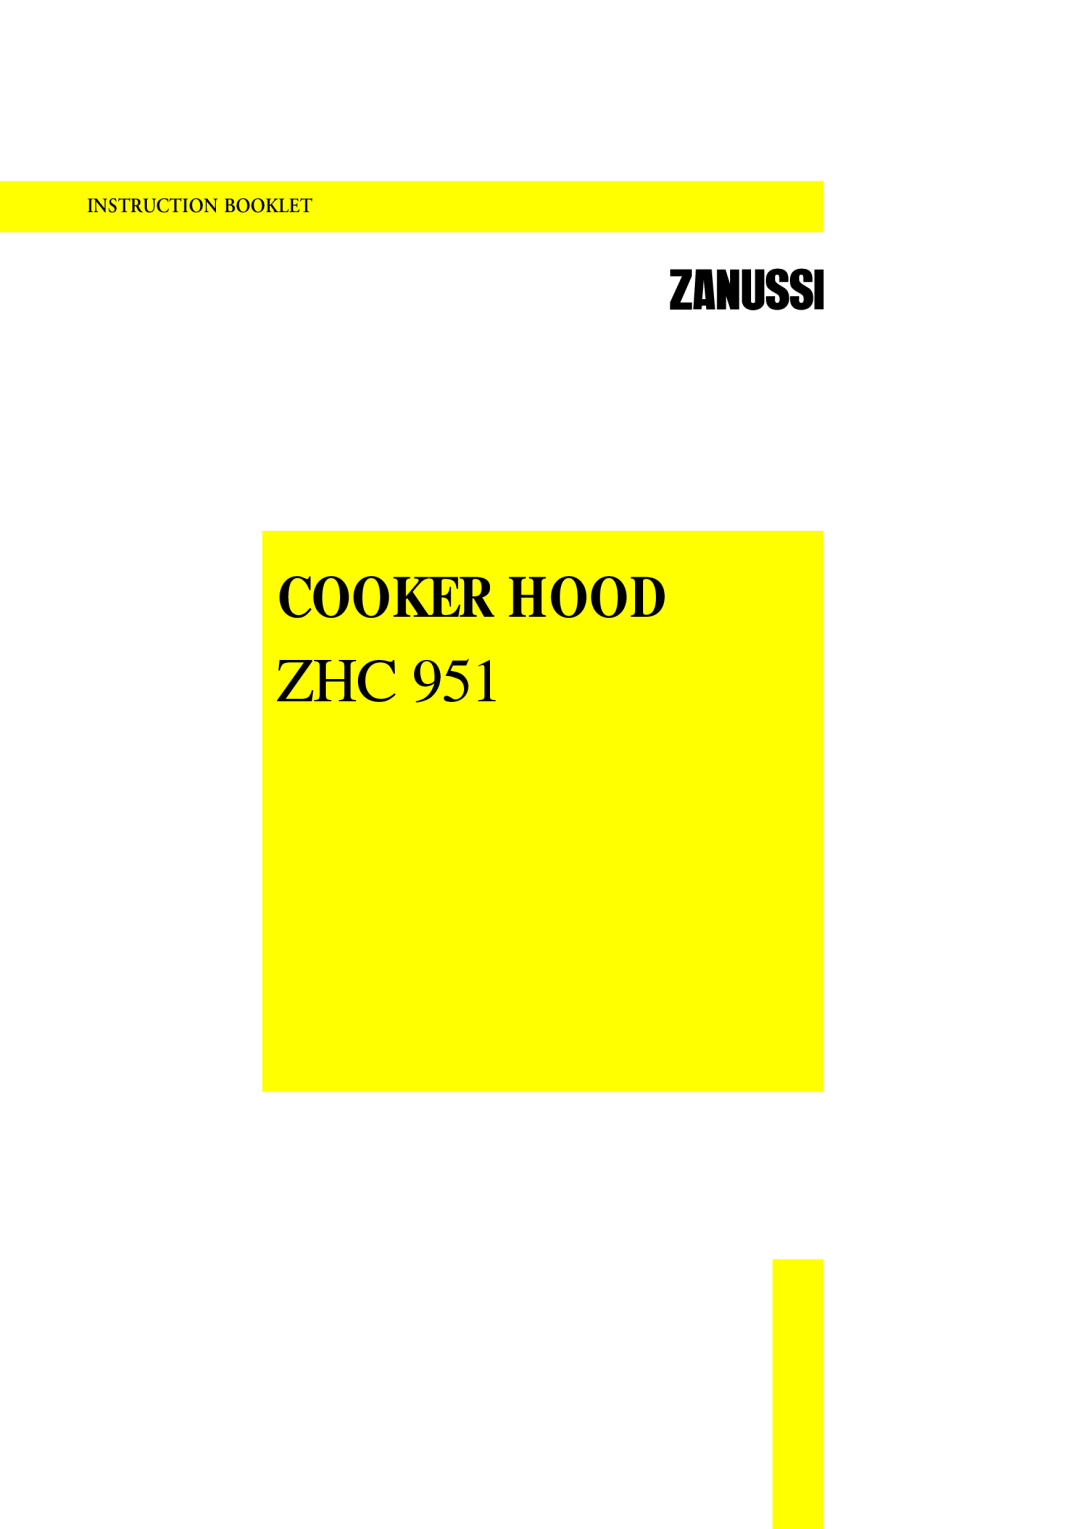 Zanussi ZHC 951 manual Cooker Hood, Instruction Booklet 